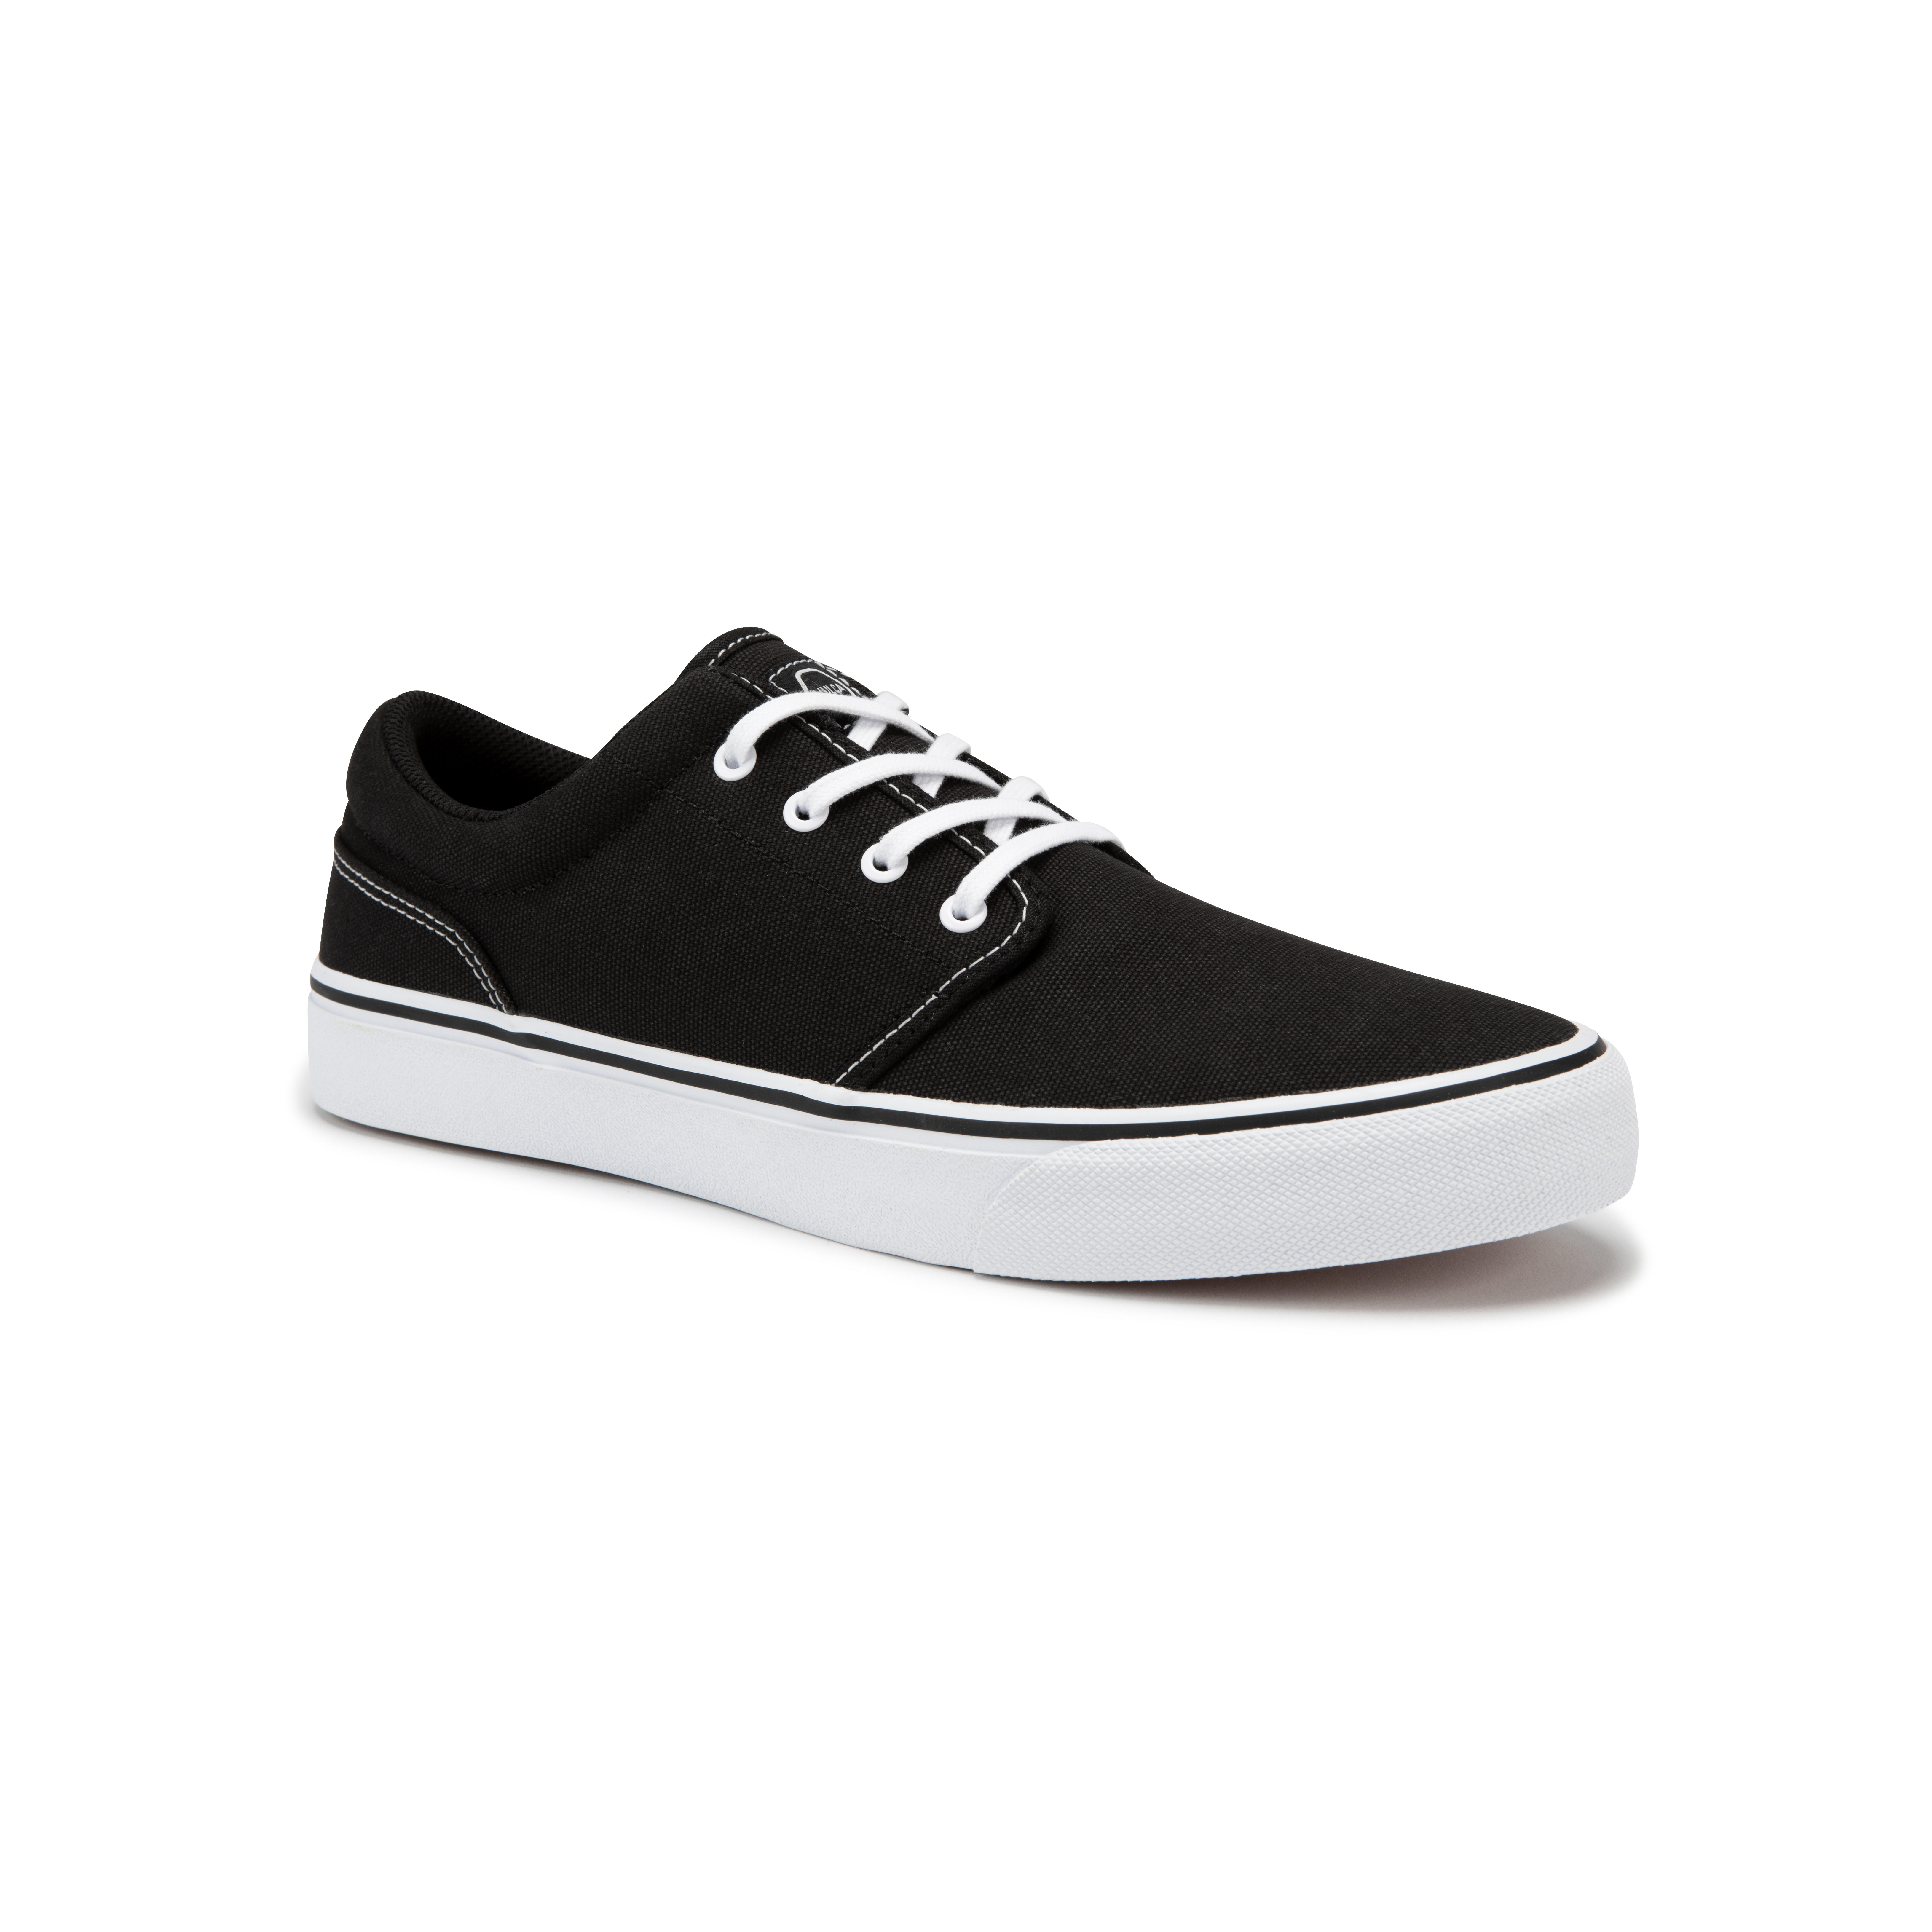 Adult Low-Top Skateboarding Longboarding Shoes Vulca 100 - Black/White - UK 8.5 - EU 43 By OXELO | Decathlon